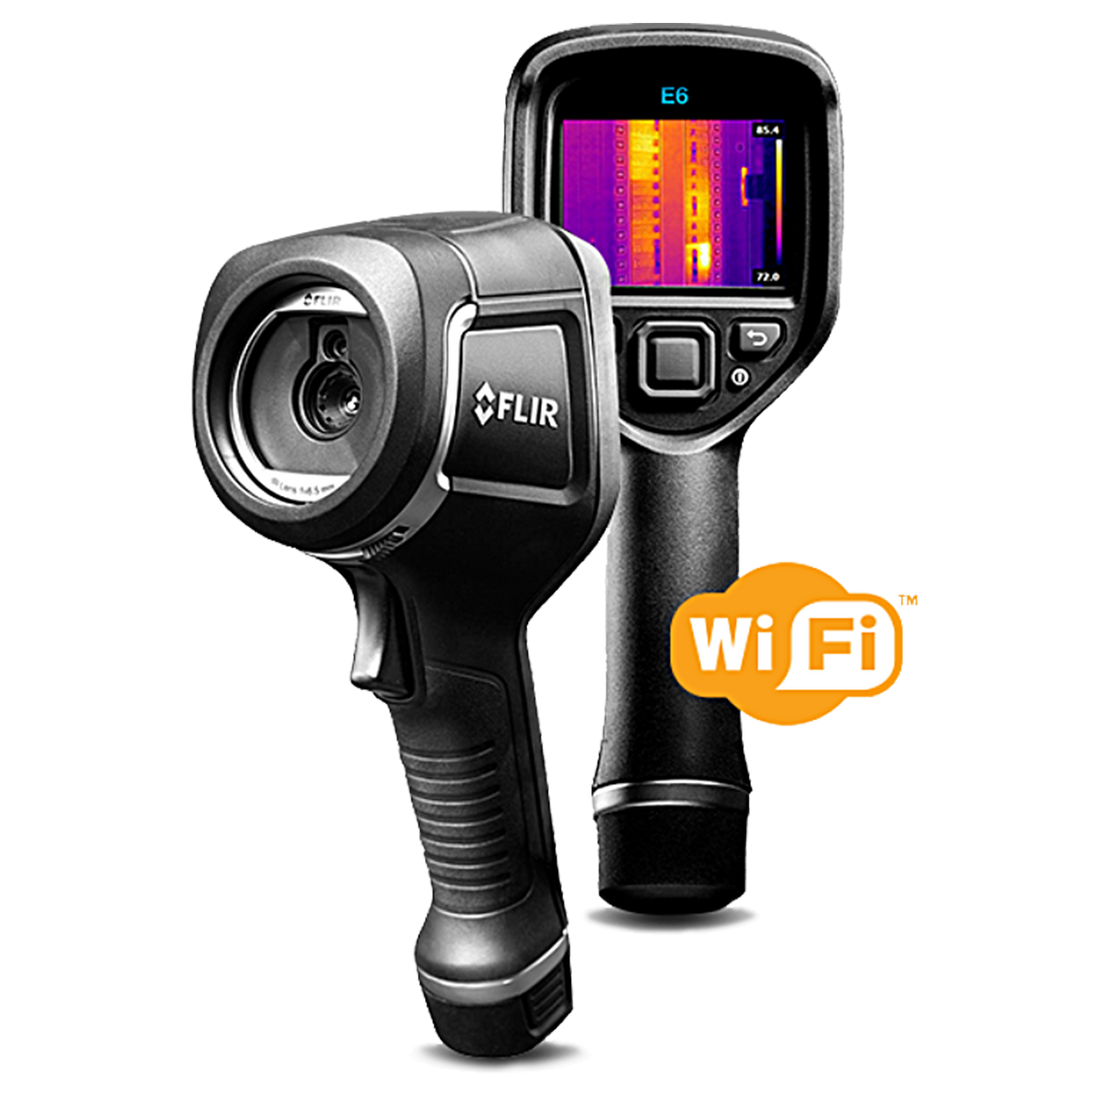 Flir E6-XT Infrared Camera, 240 x 180 Pixels, -4° to 1022°